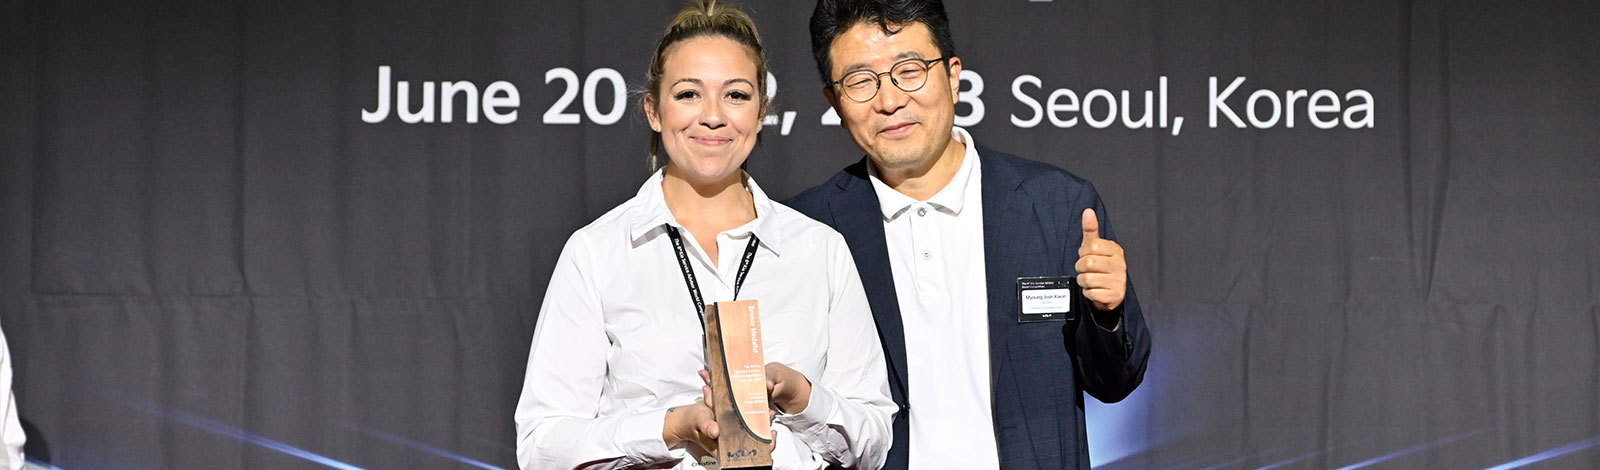 Motorama Kia Service Advisor Wins Bronze at Kia Service Advisor World Competition featured image